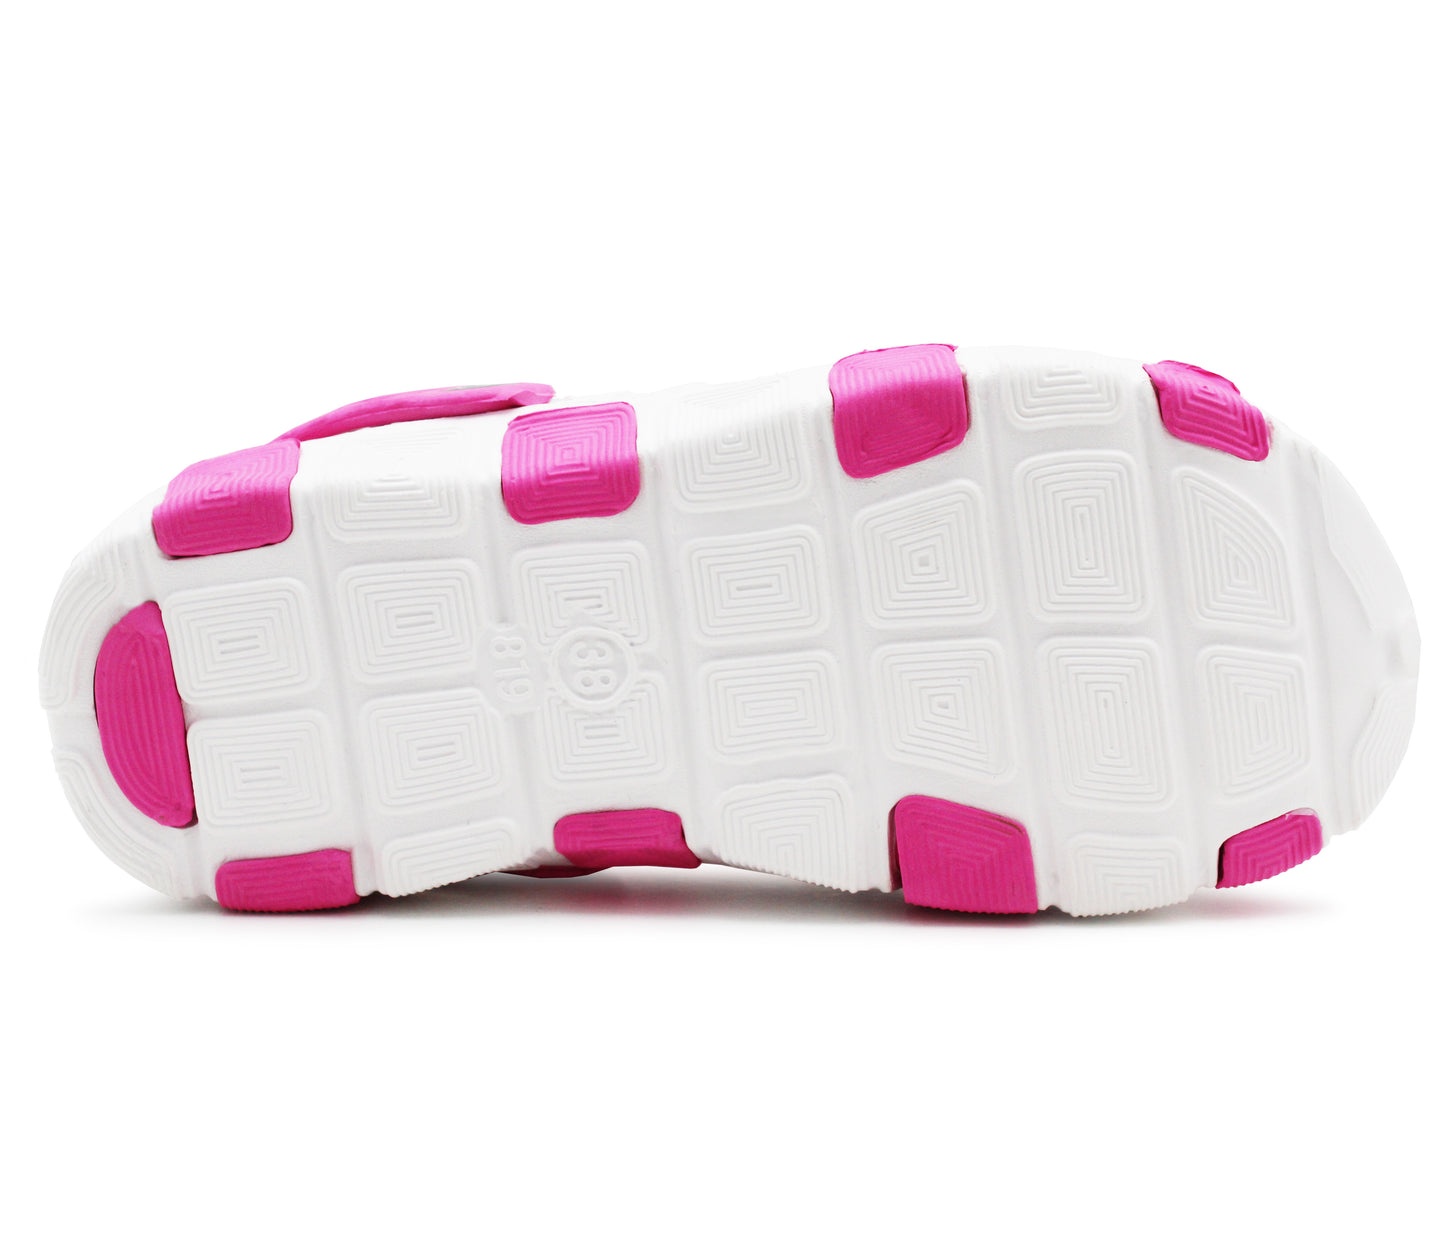 Womens Clogs Lightweight White Pink EVA Breathable Beach Summer Sandals Ladies Garden Hospital Shower Pool Shoes